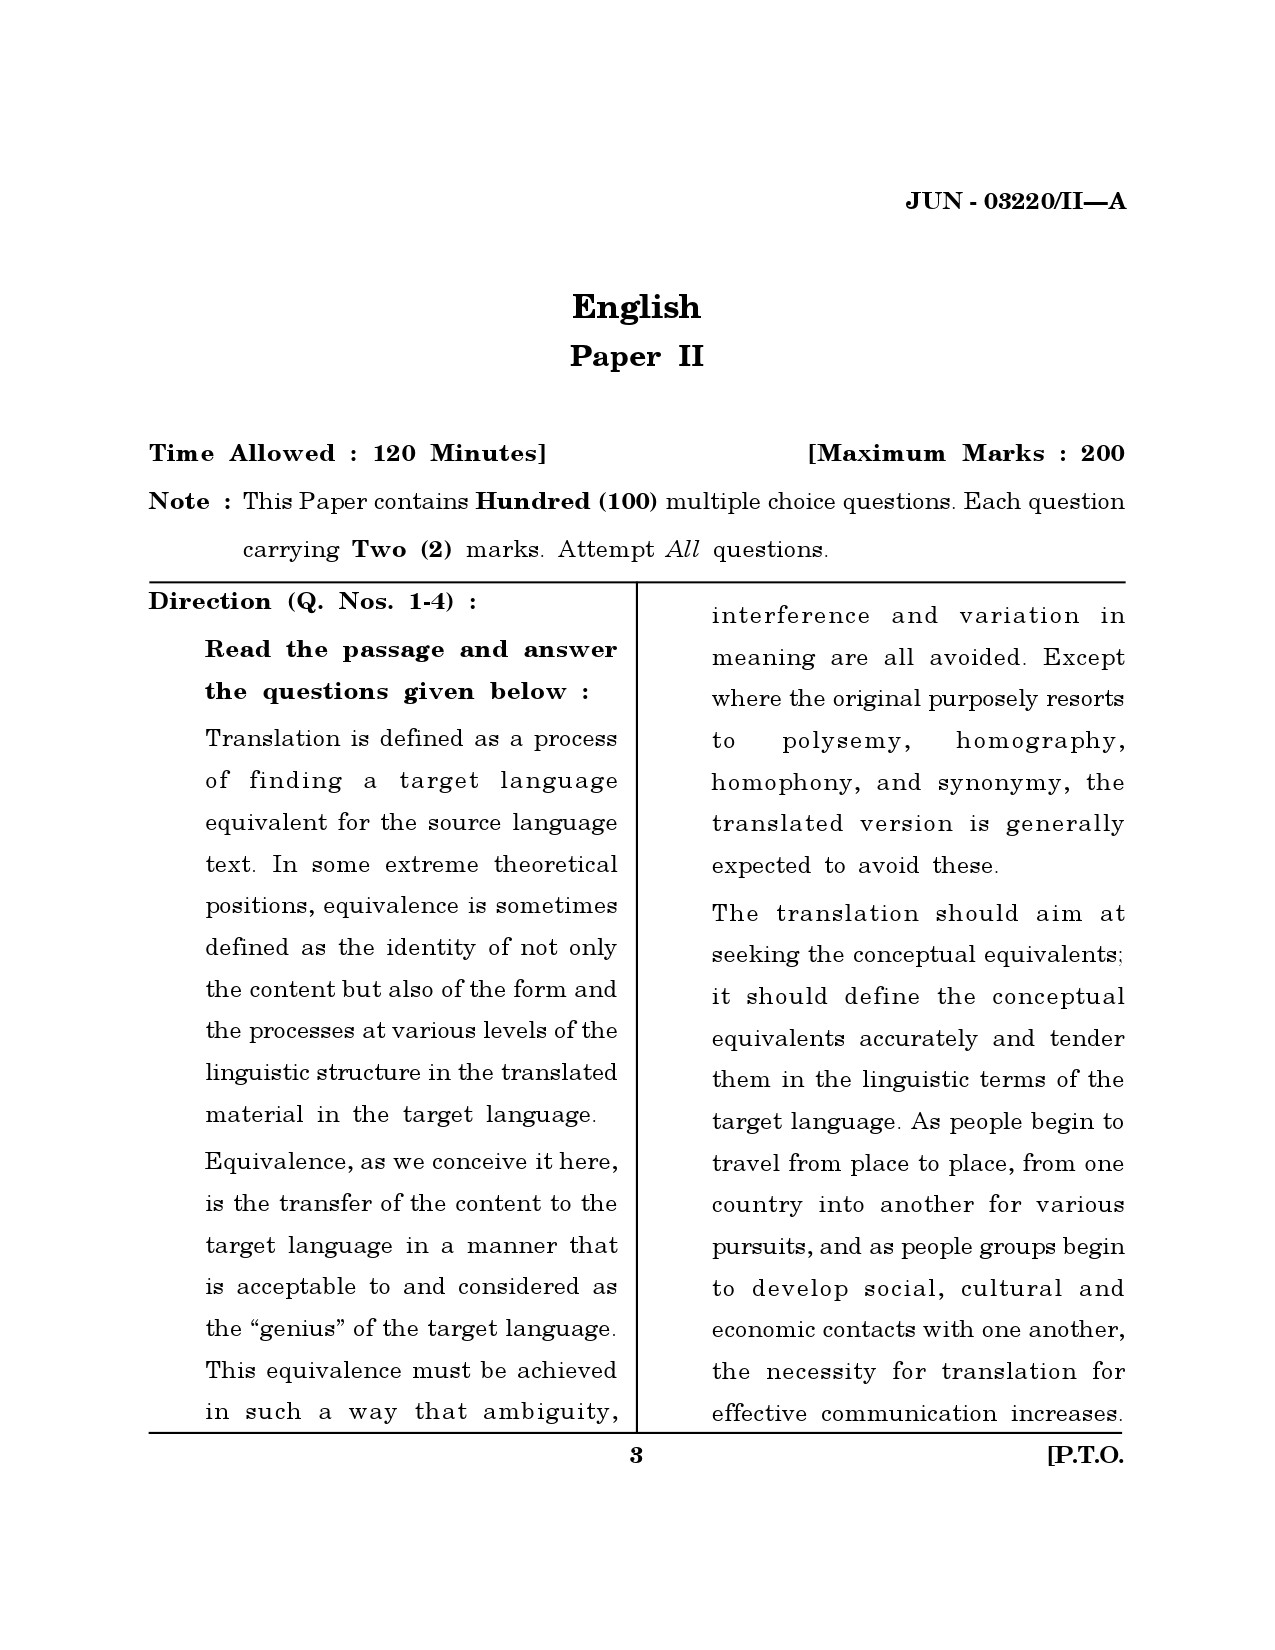 Maharashtra SET English Question Paper II June 2020 2